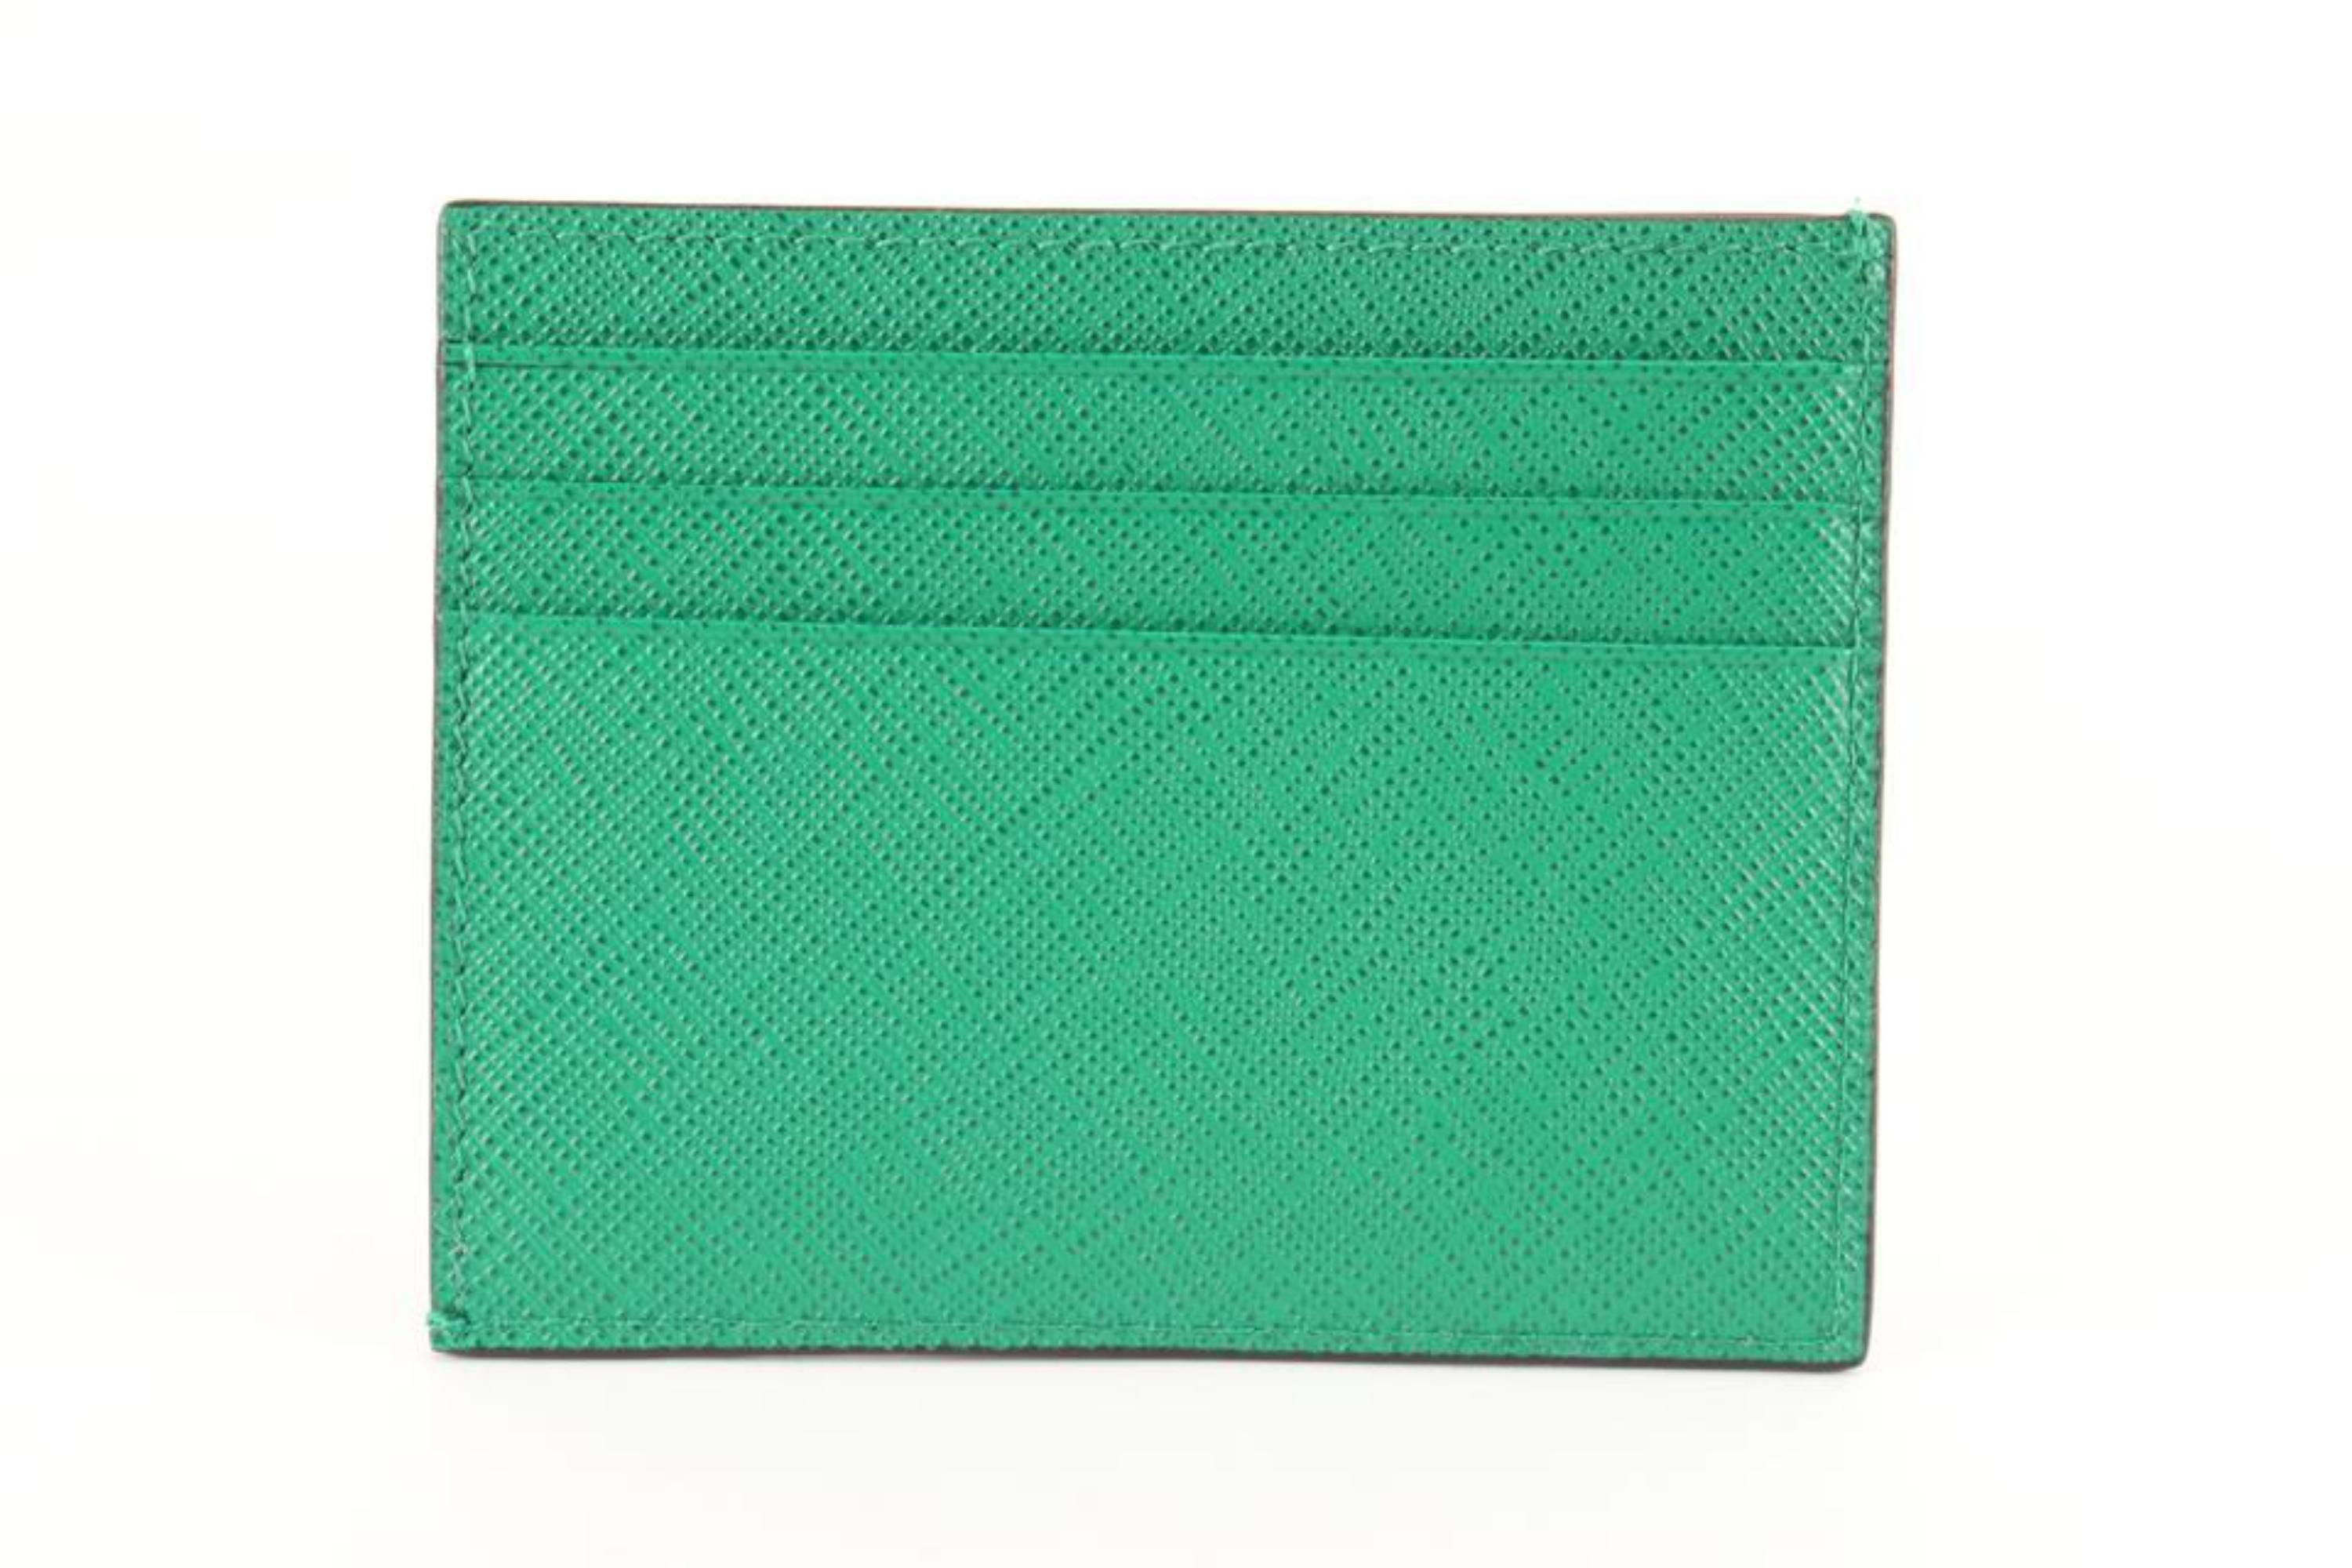 Prada Green Saffiano Leather Card Holder 57p825s 3